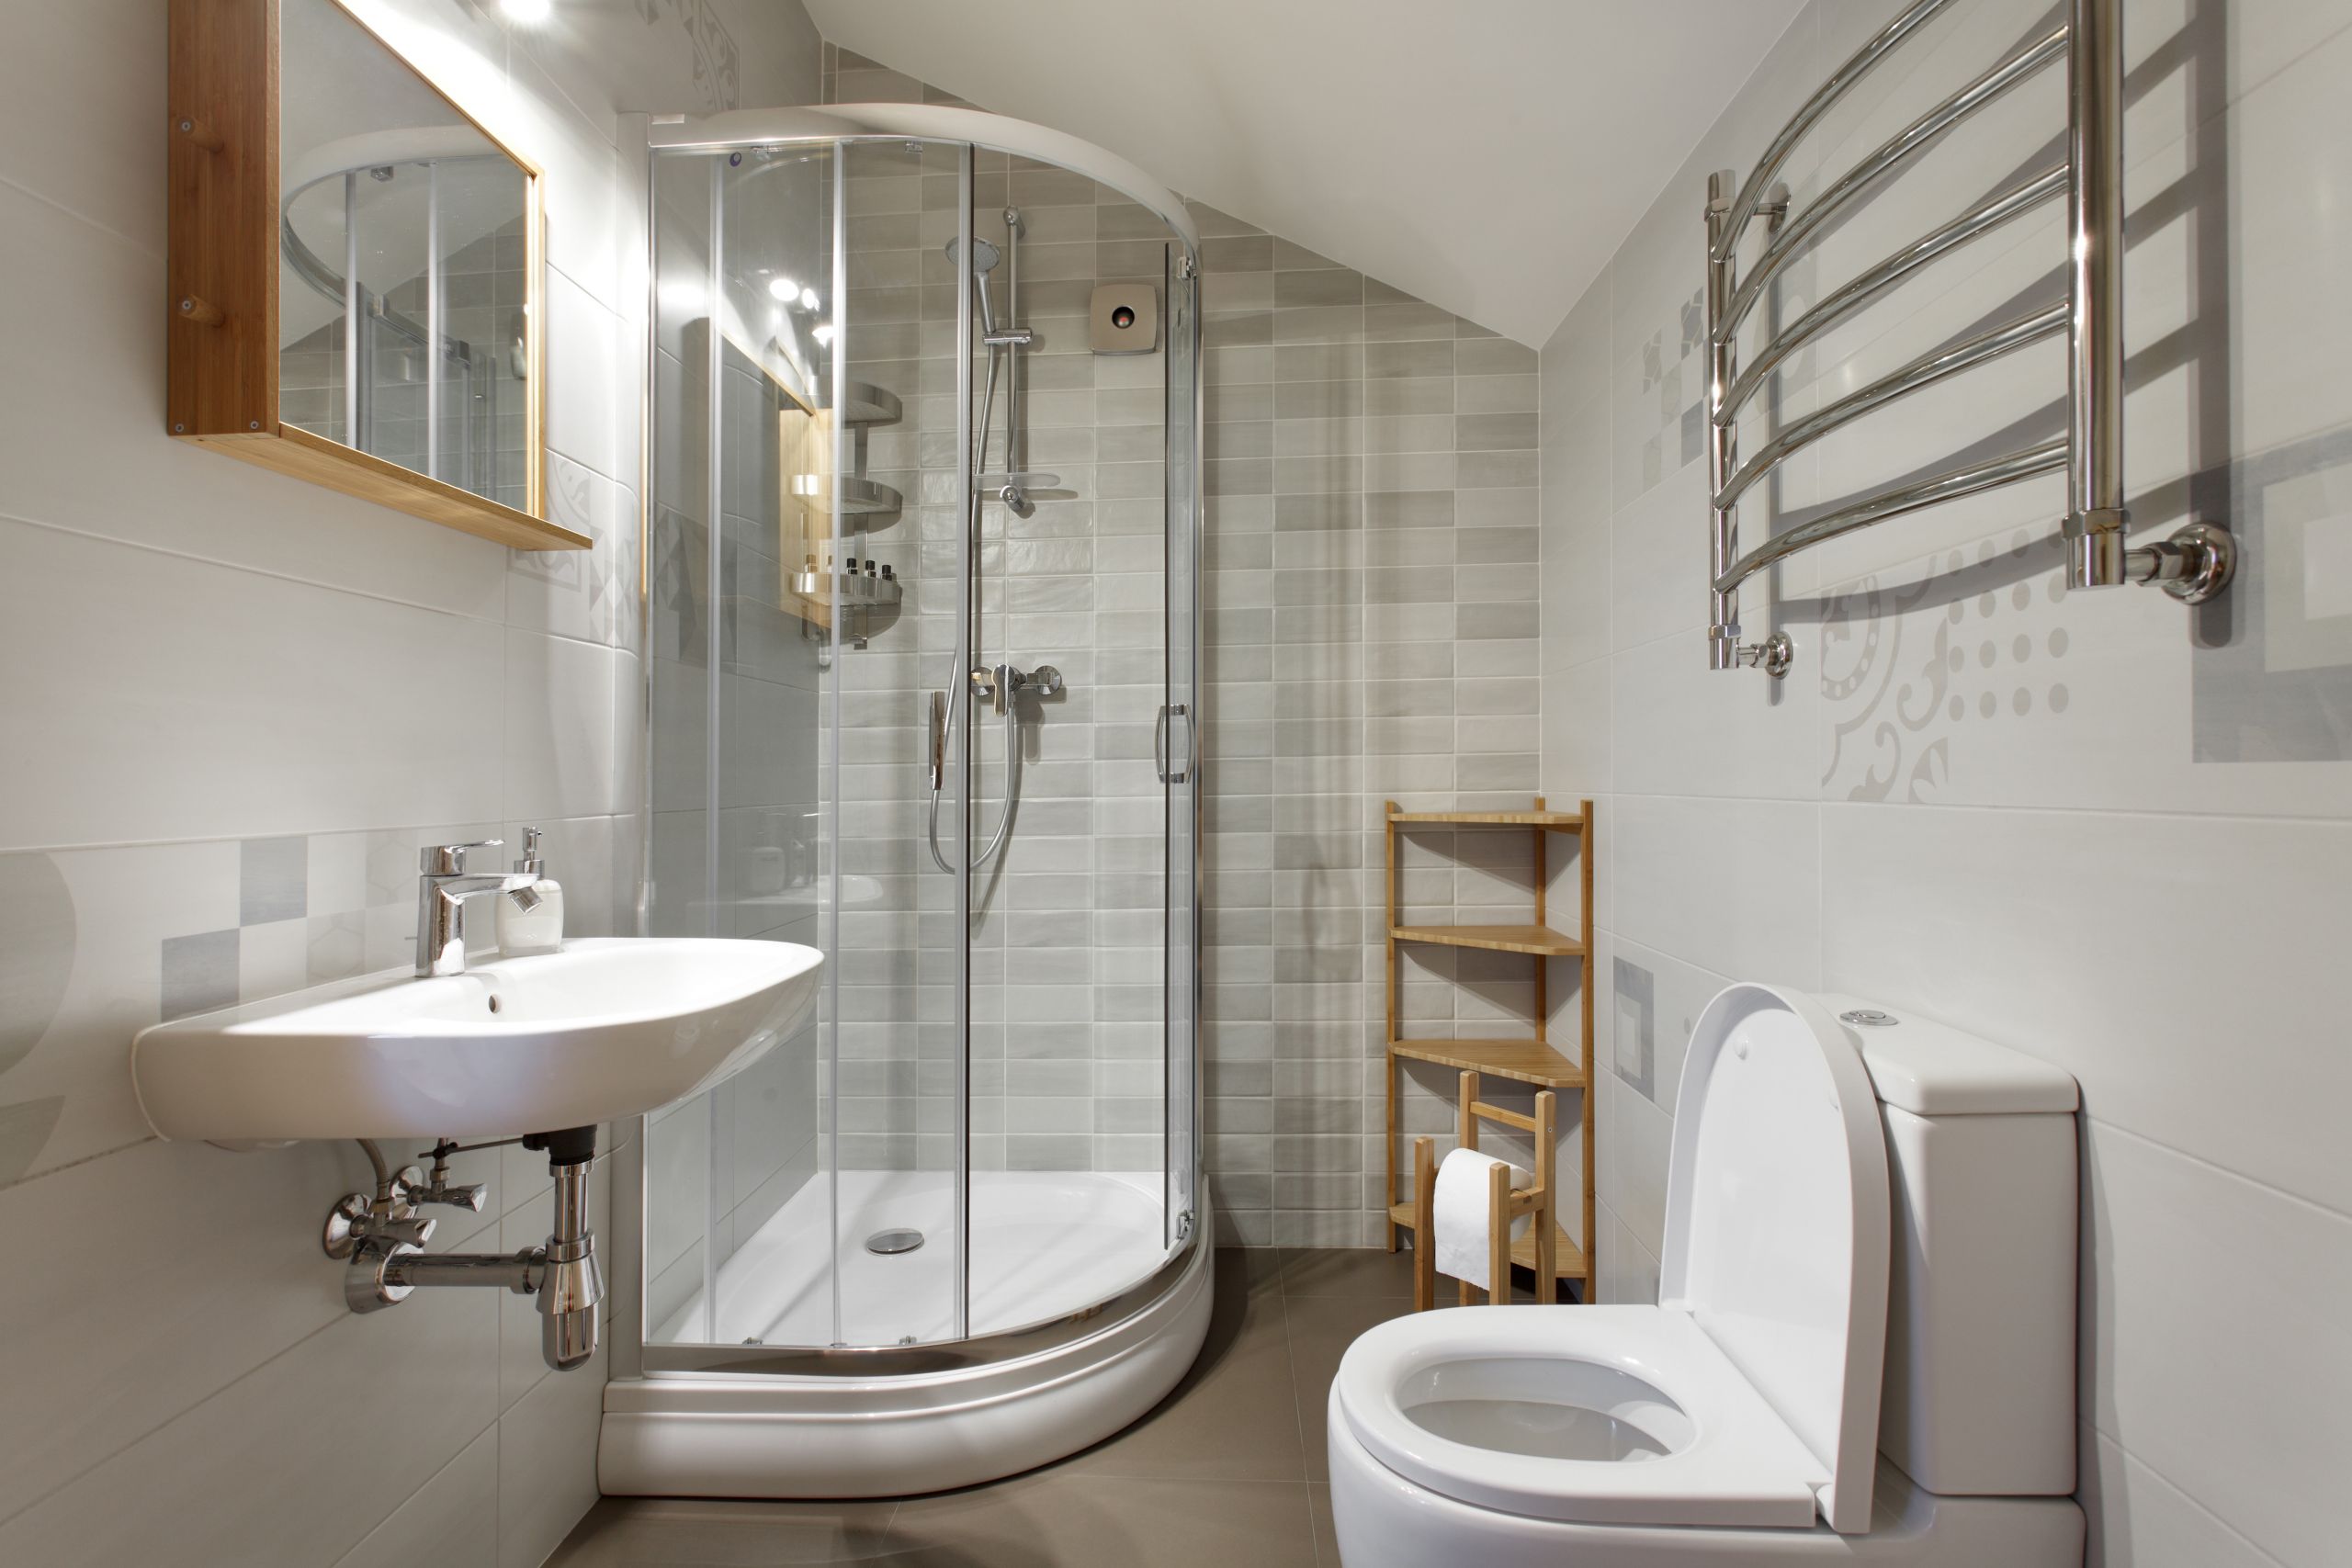 Standard Master Bathroom Size
 Bathroom Accessories Standard Dimensions Home Sweet Home